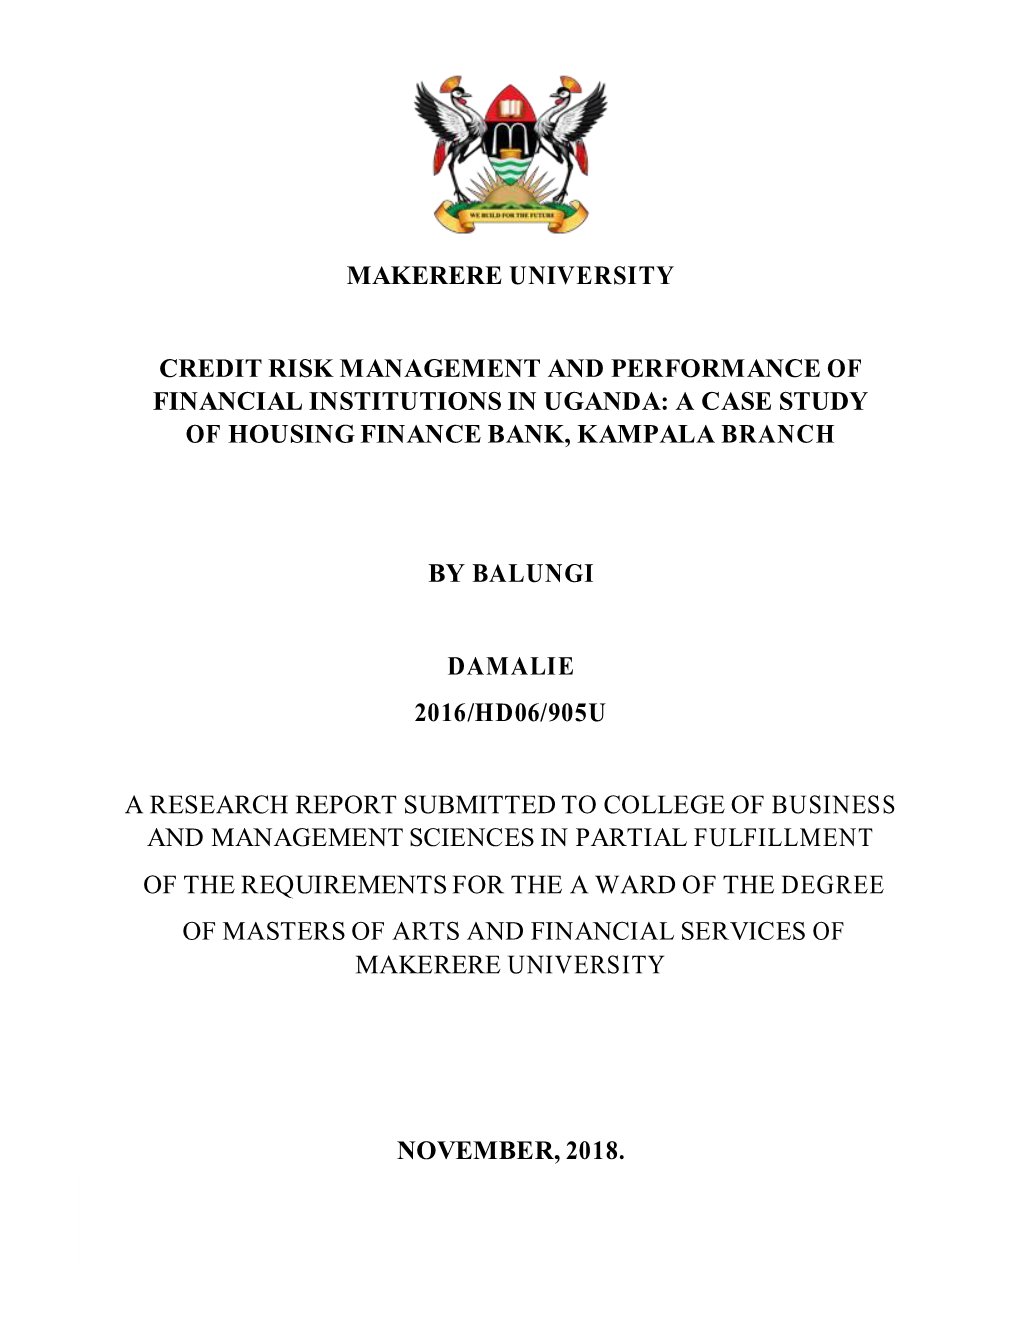 Makerere University Credit Risk